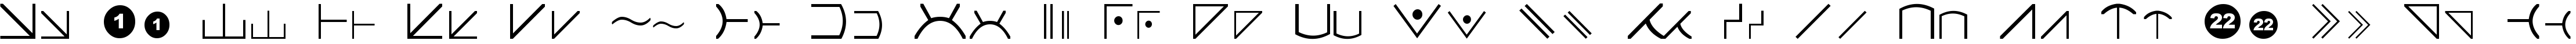 Пример написания английского алфавита шрифтом Futurama Alien Alphabet Two